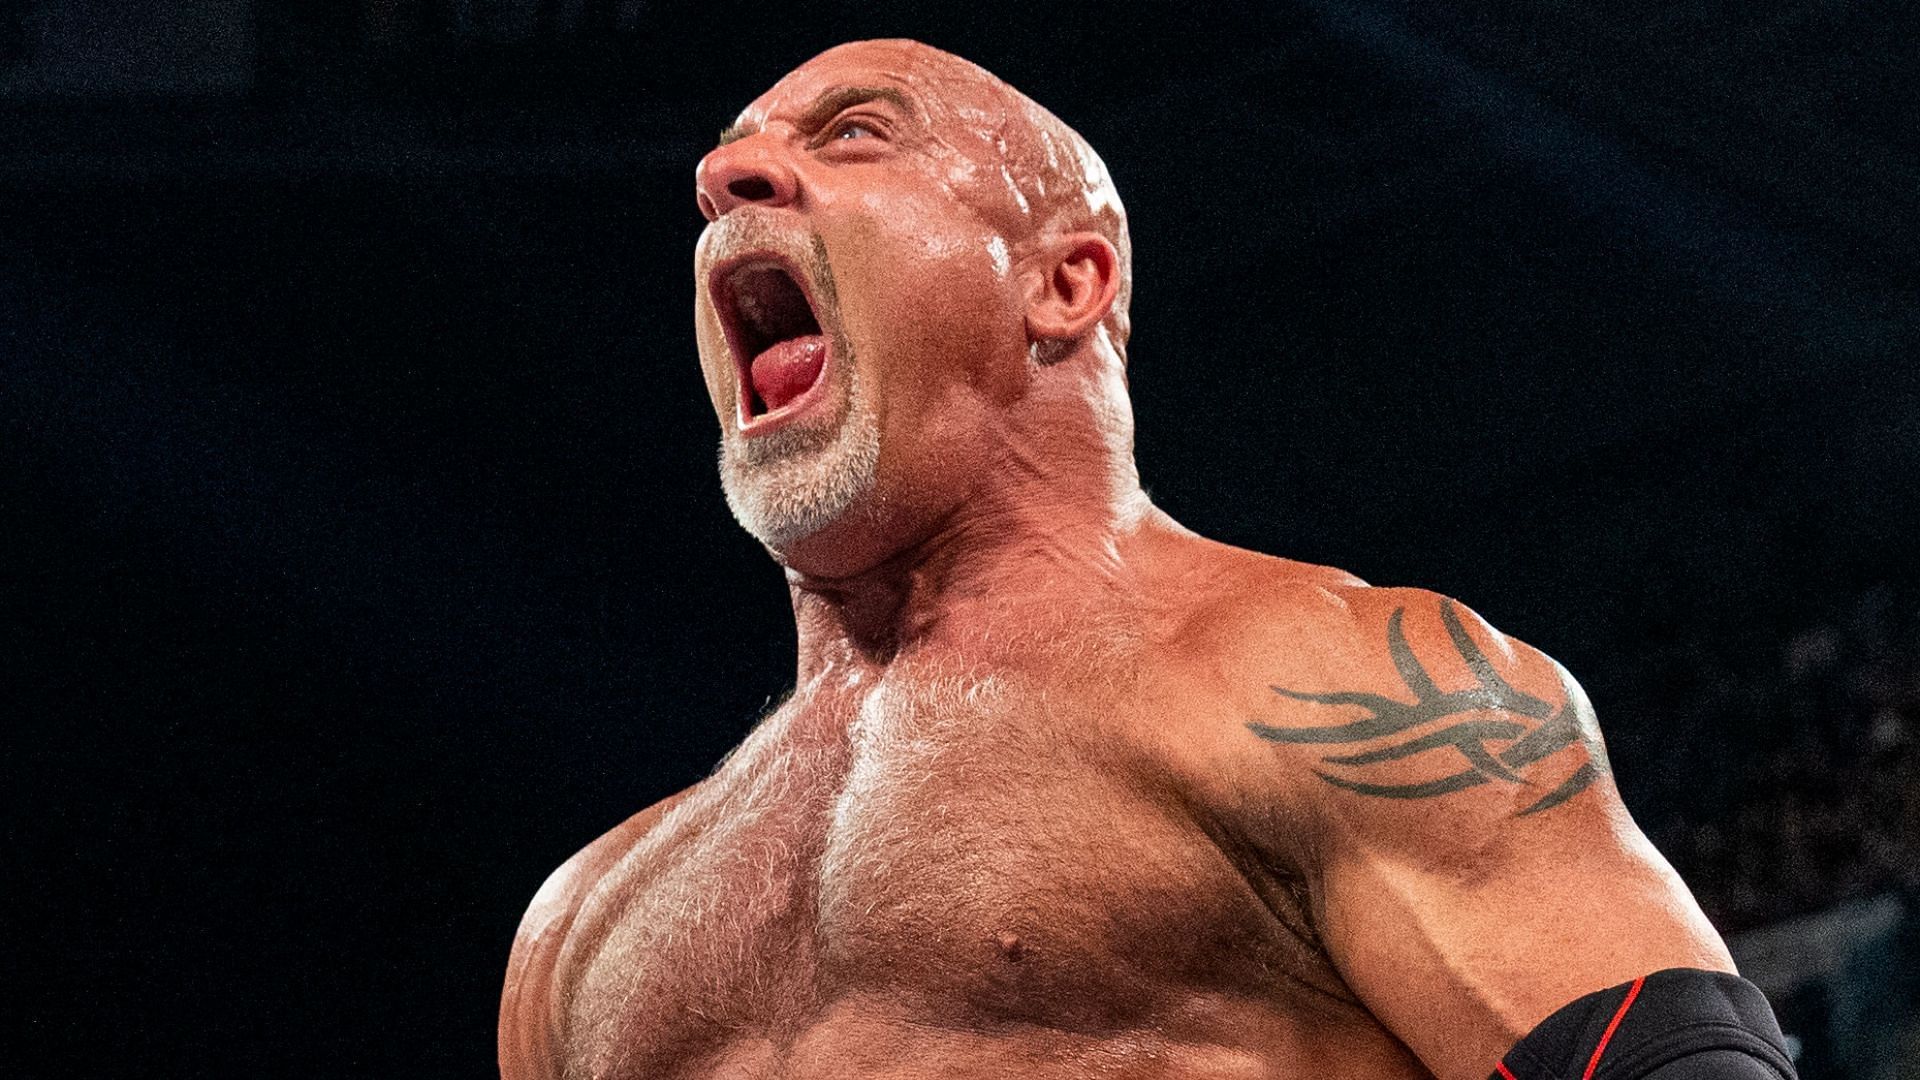 WWE Hall of Famer Goldberg had his last match at Elimination Chamber 2022.